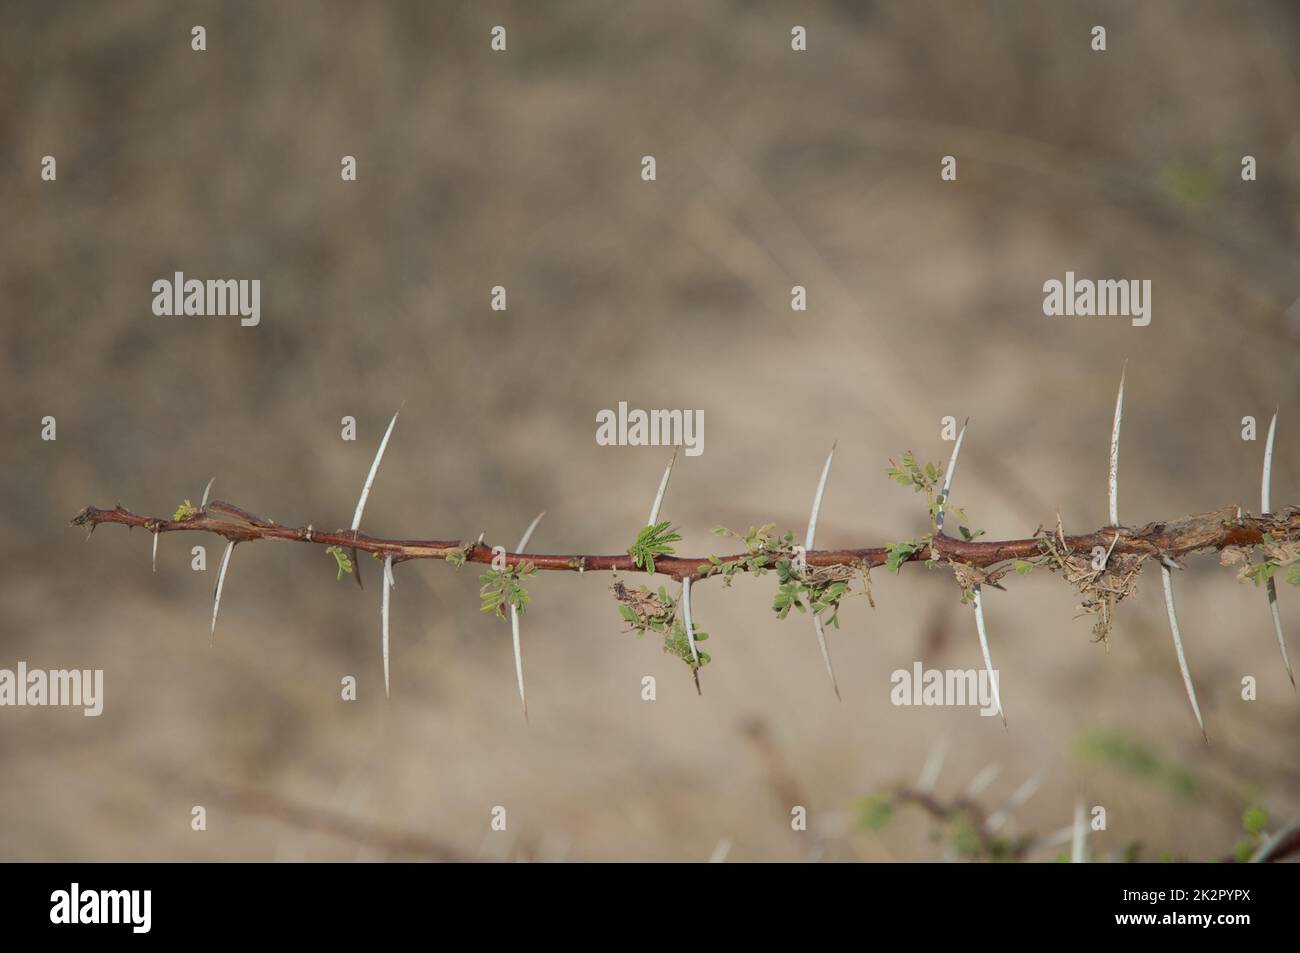 Thorny branch of gum acacia Senegalia senegal. Stock Photo